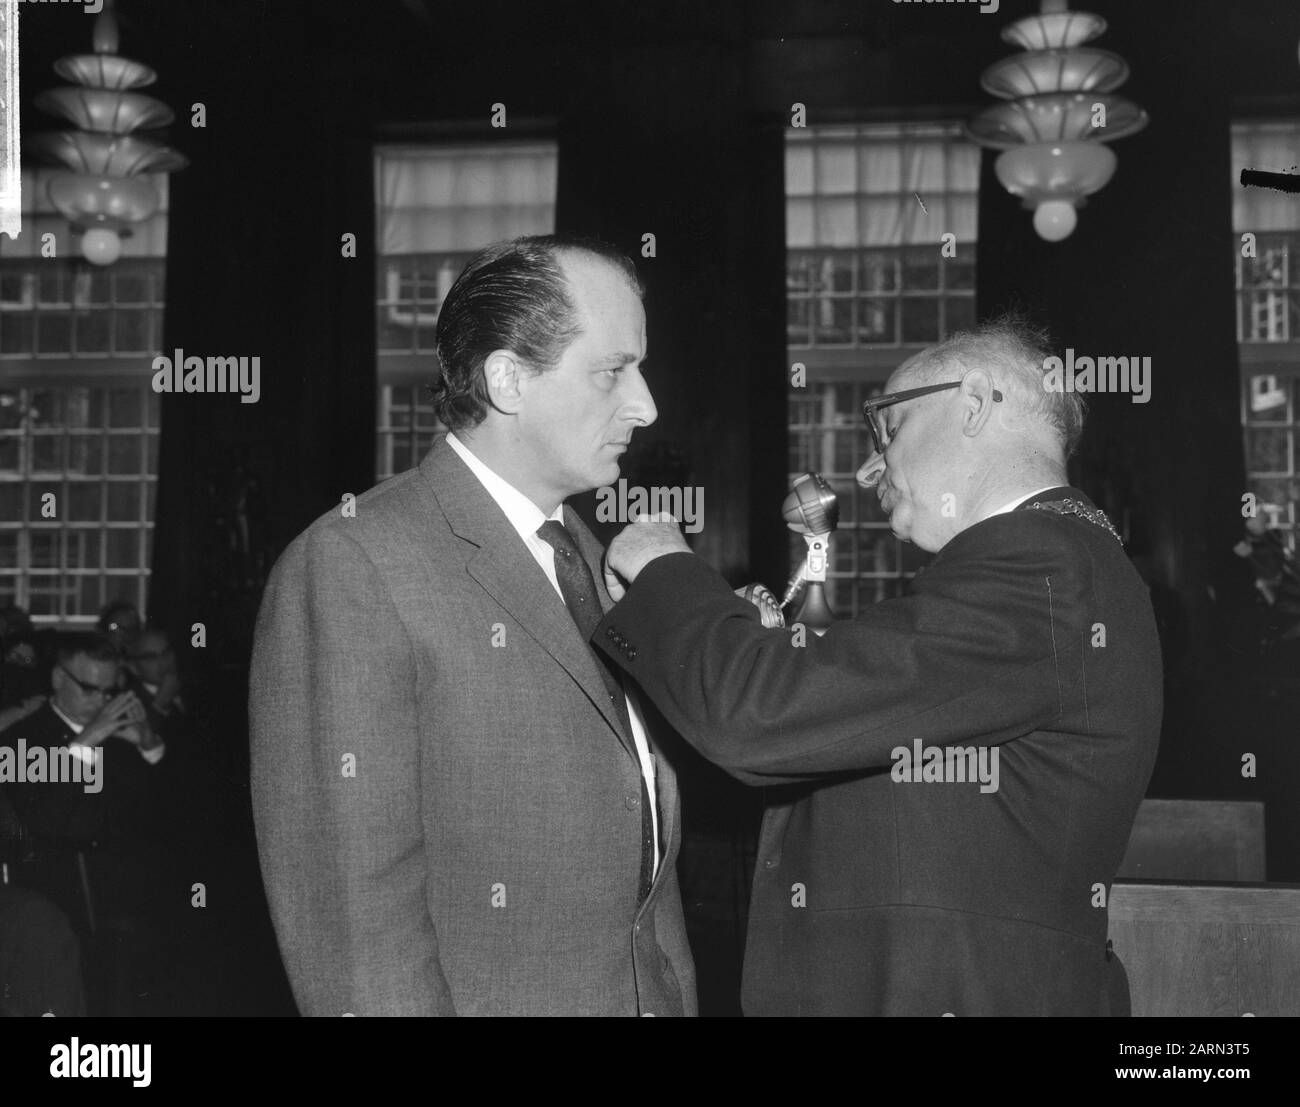 Premi Royal Awards, vice sindaci alderman Van Wijk gira il premio a A.C. Hermus Data: 29 Aprile 1964 Parole Chiave: Premi, Premi Nome personale: AC Hermus Foto Stock